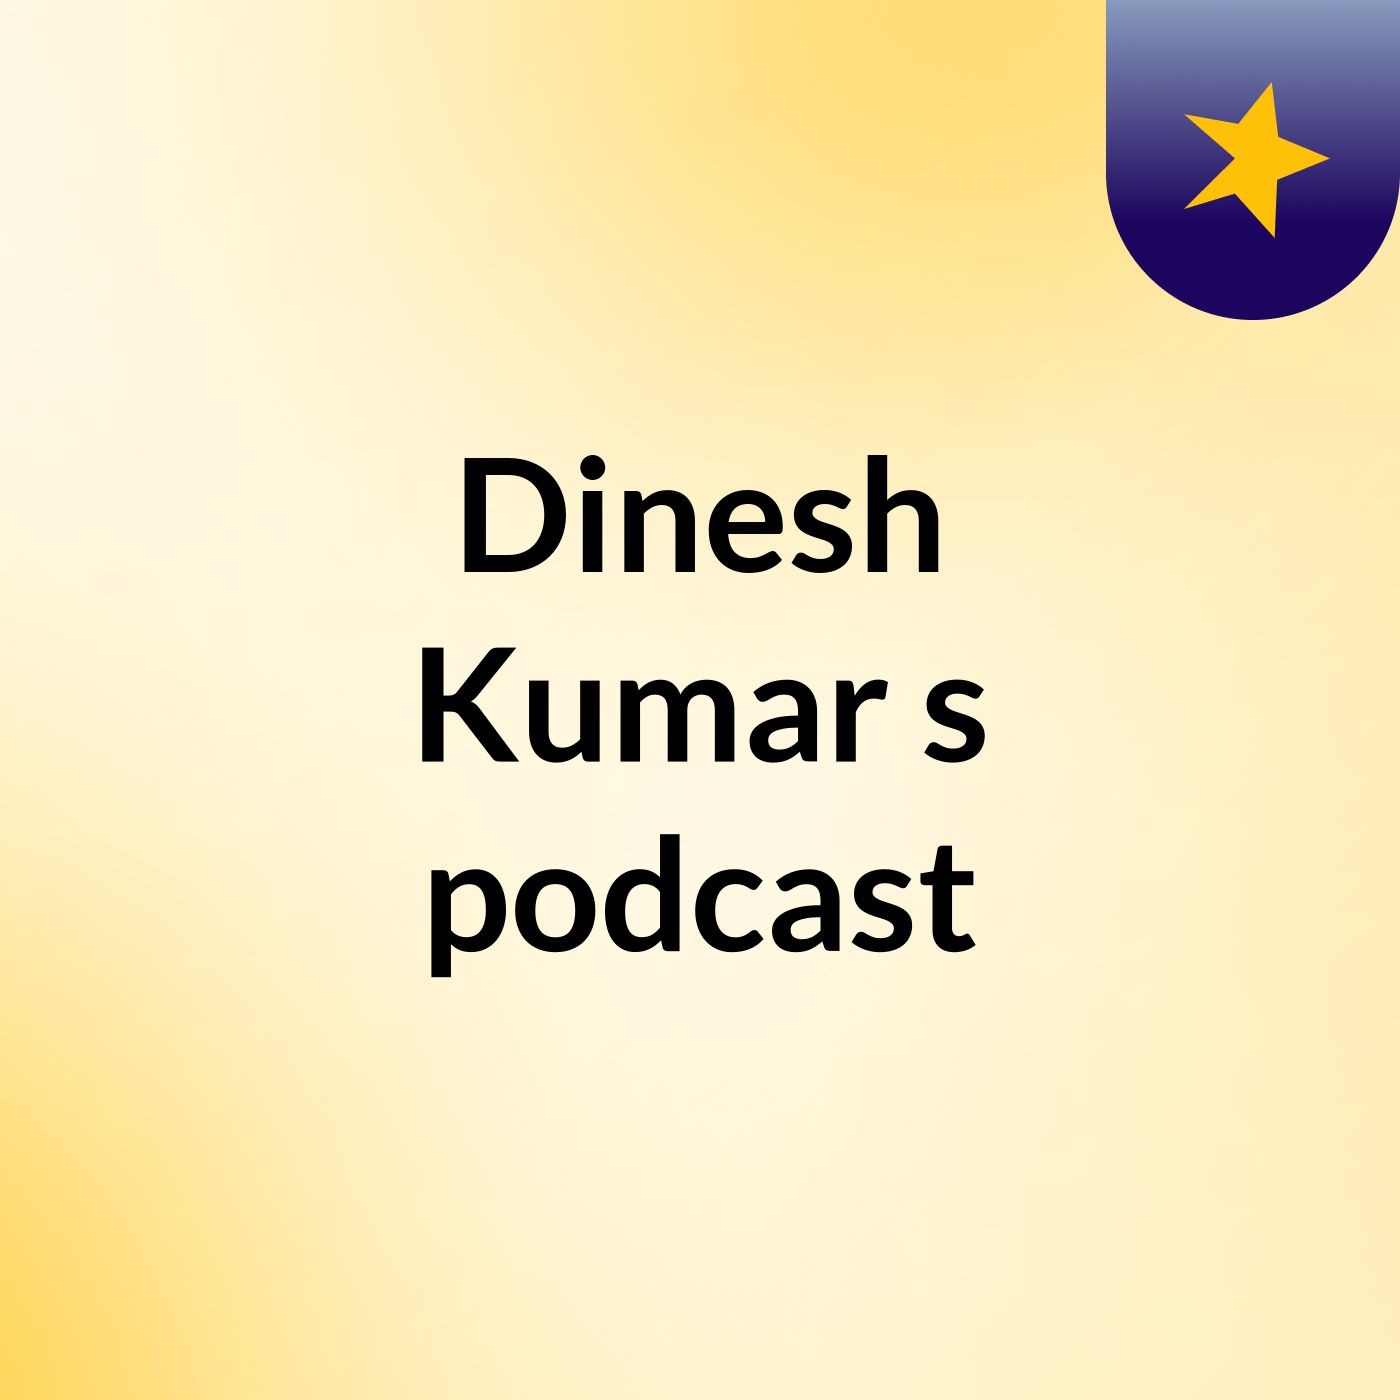 Episode 4 - Dinesh Kumar's podcast